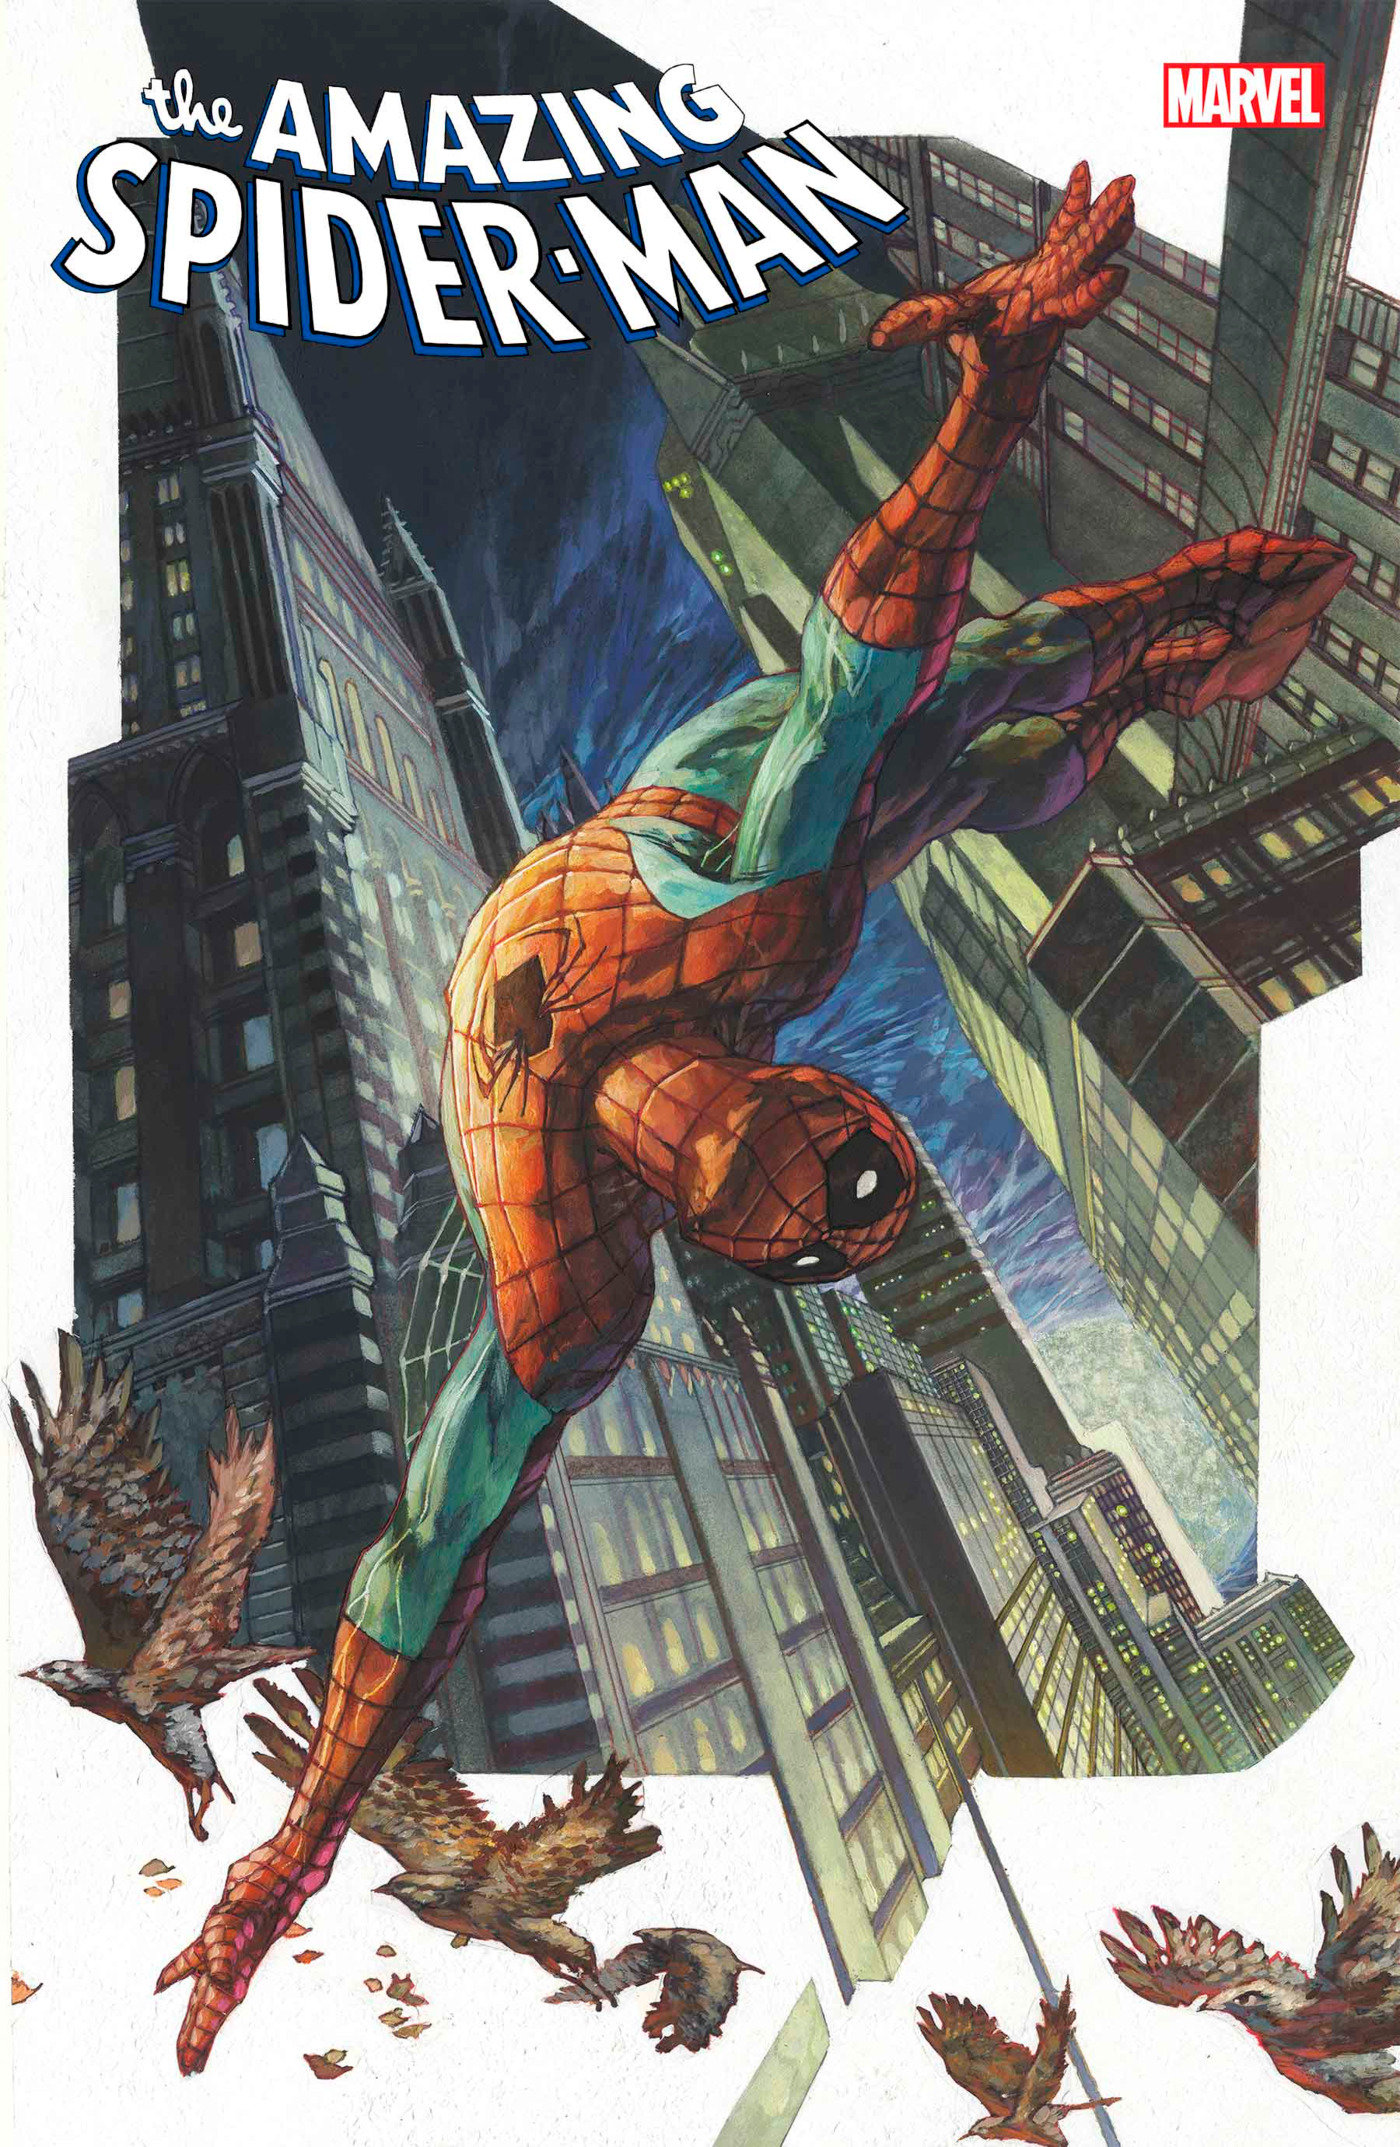 Amazing Spider-Man #41 1 for 25 Variant Simone Bianchi Variant (Gang War)